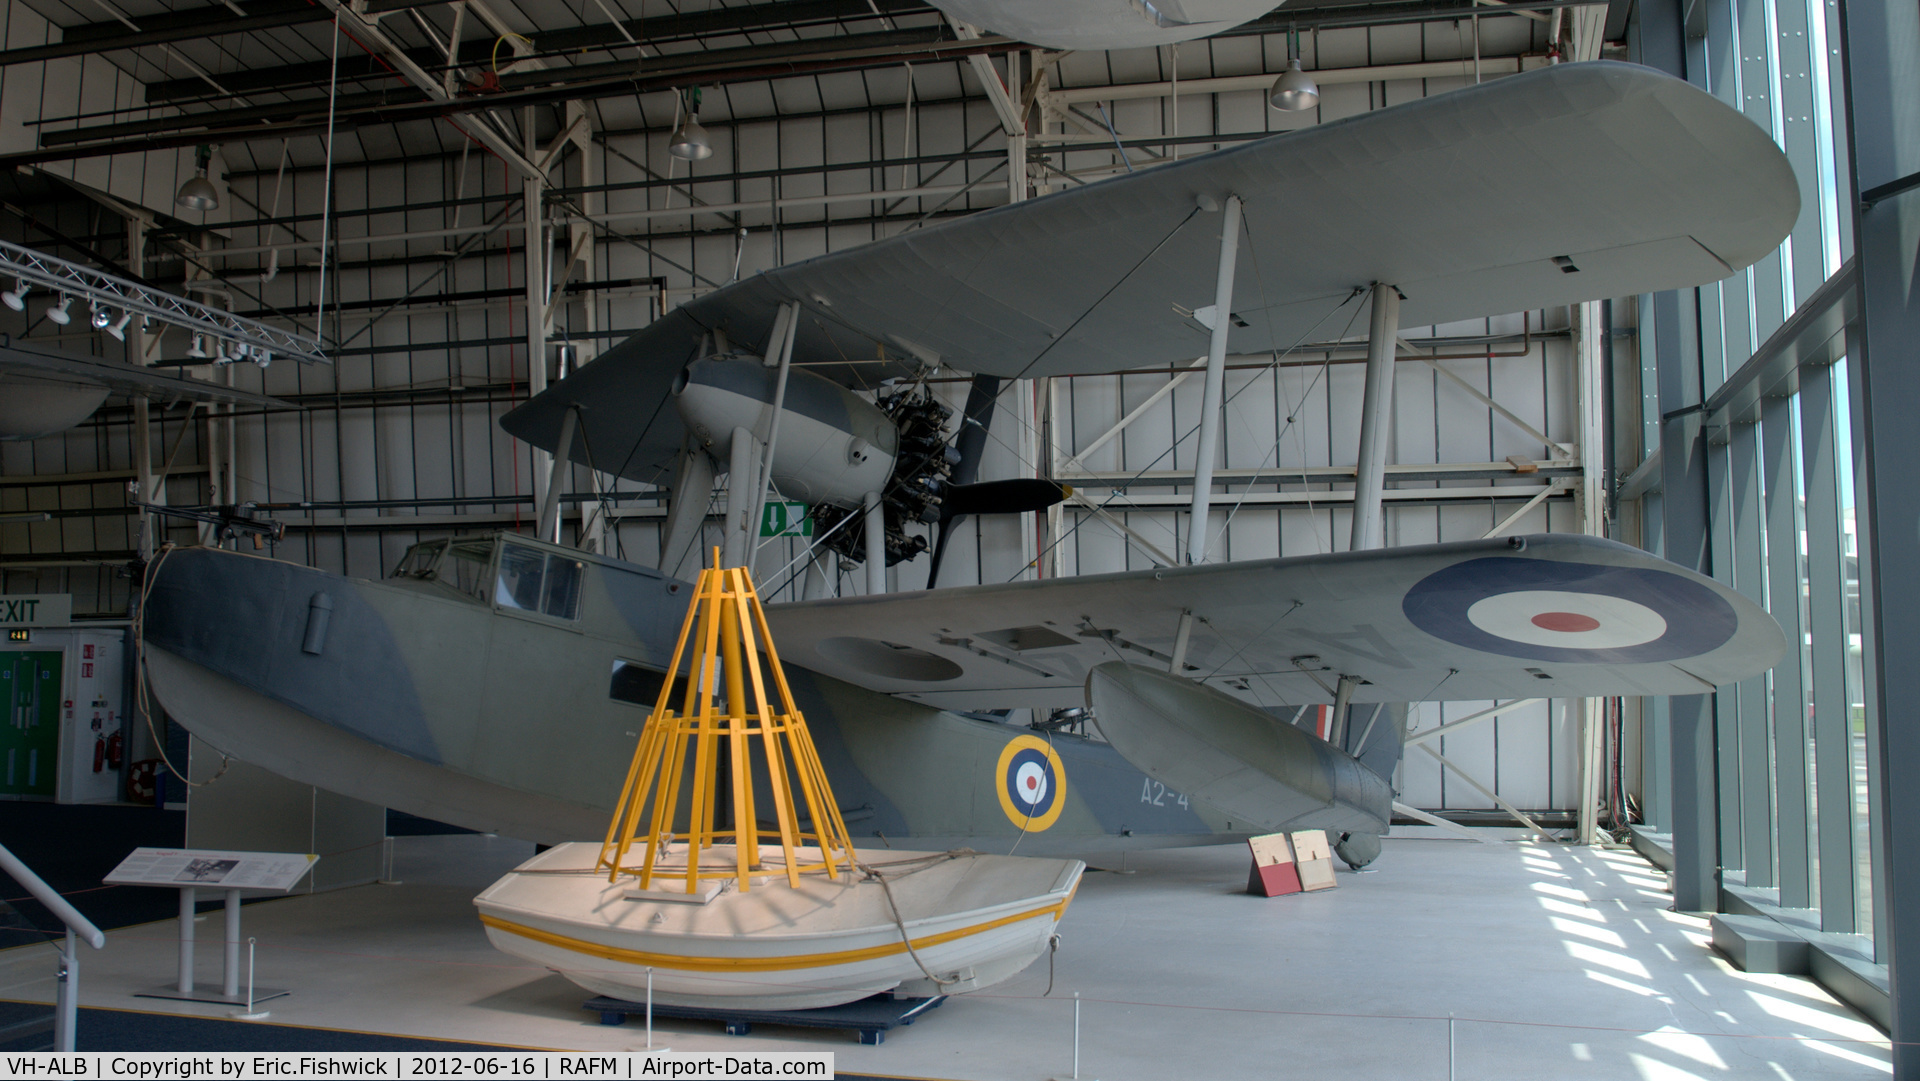 VH-ALB, Supermarine Seagull V C/N Not found A2-4/VH-ALB, 3. A2-4 at RAF Museum, Hendon.